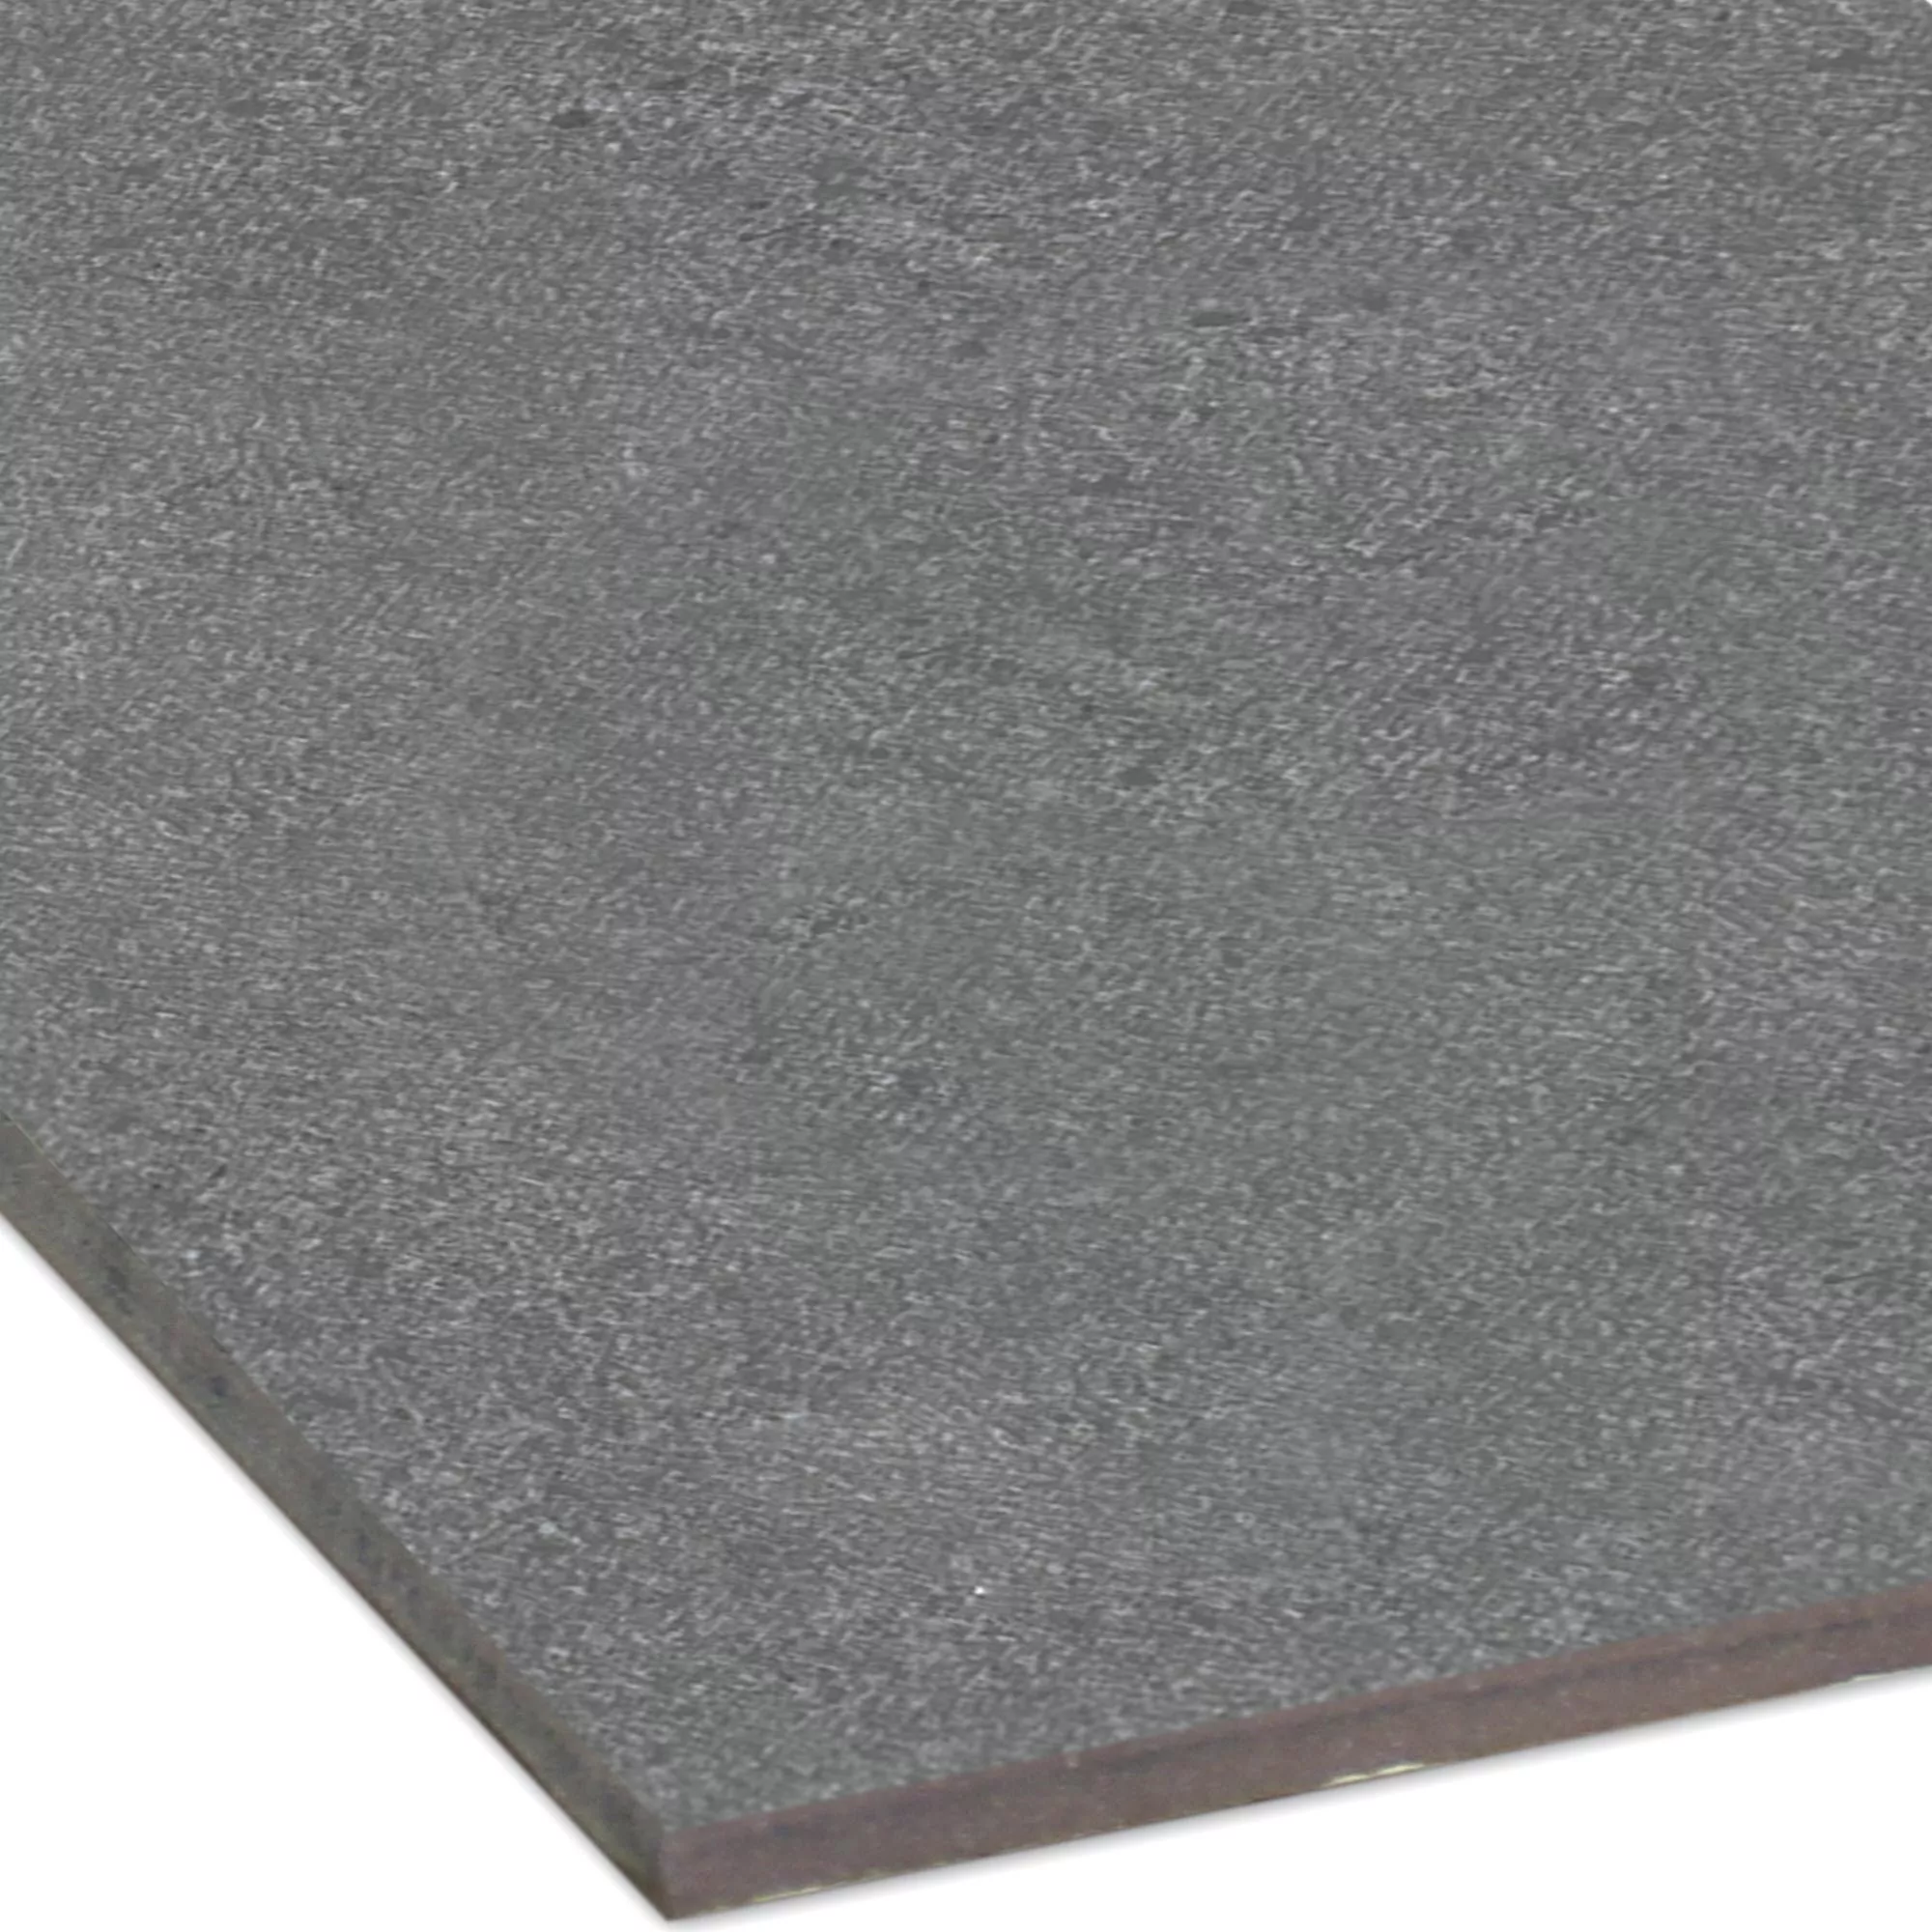 Sample Floor Tiles Galilea Unglazed R10B Anthracite 60x60cm